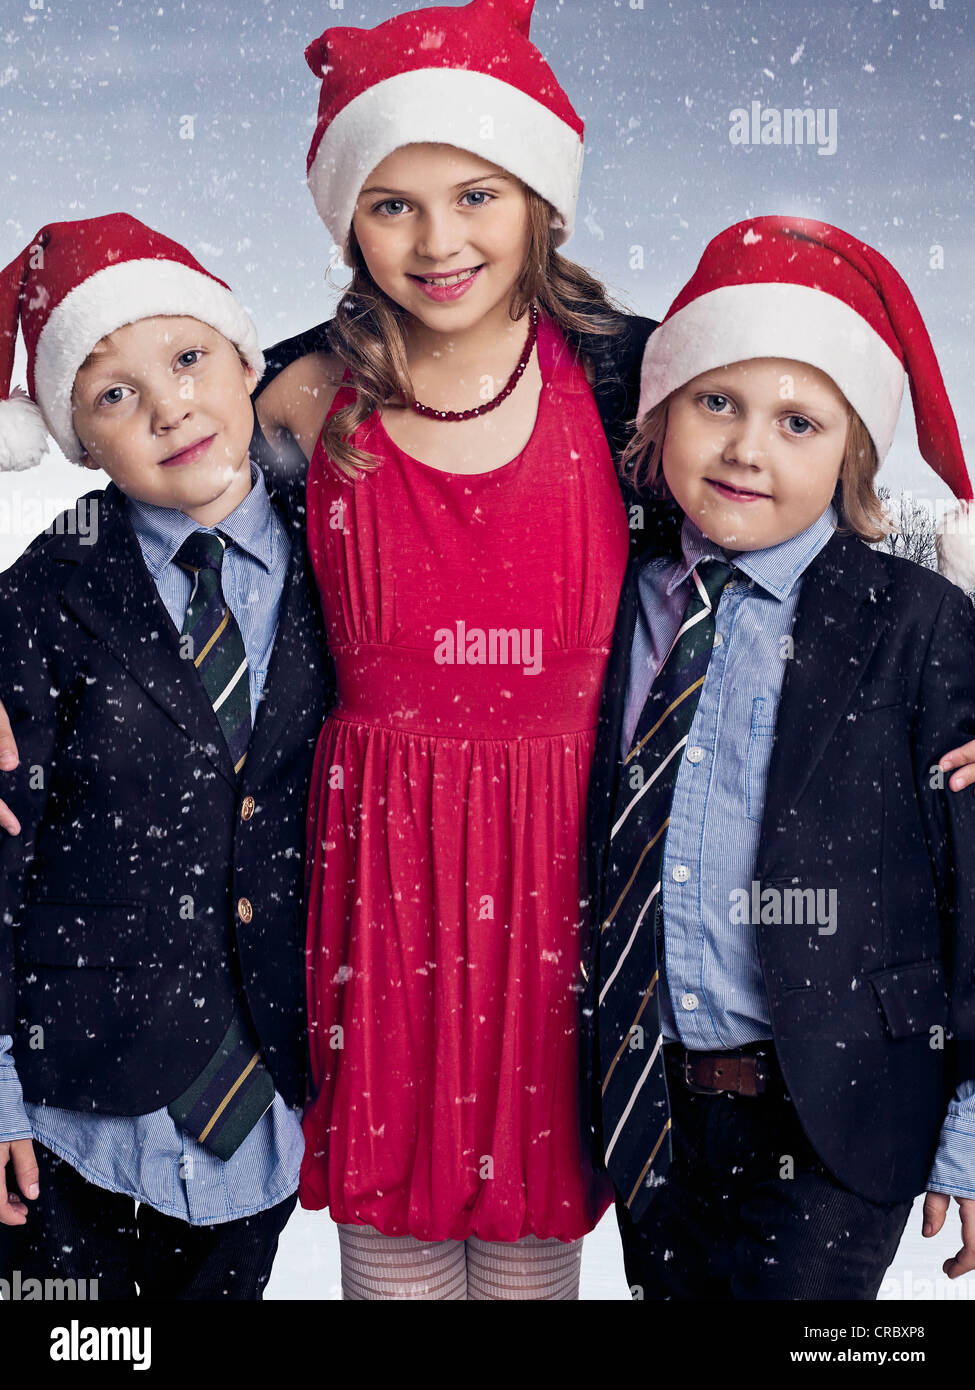 Children wearing Santa hats in snow Stock Photo